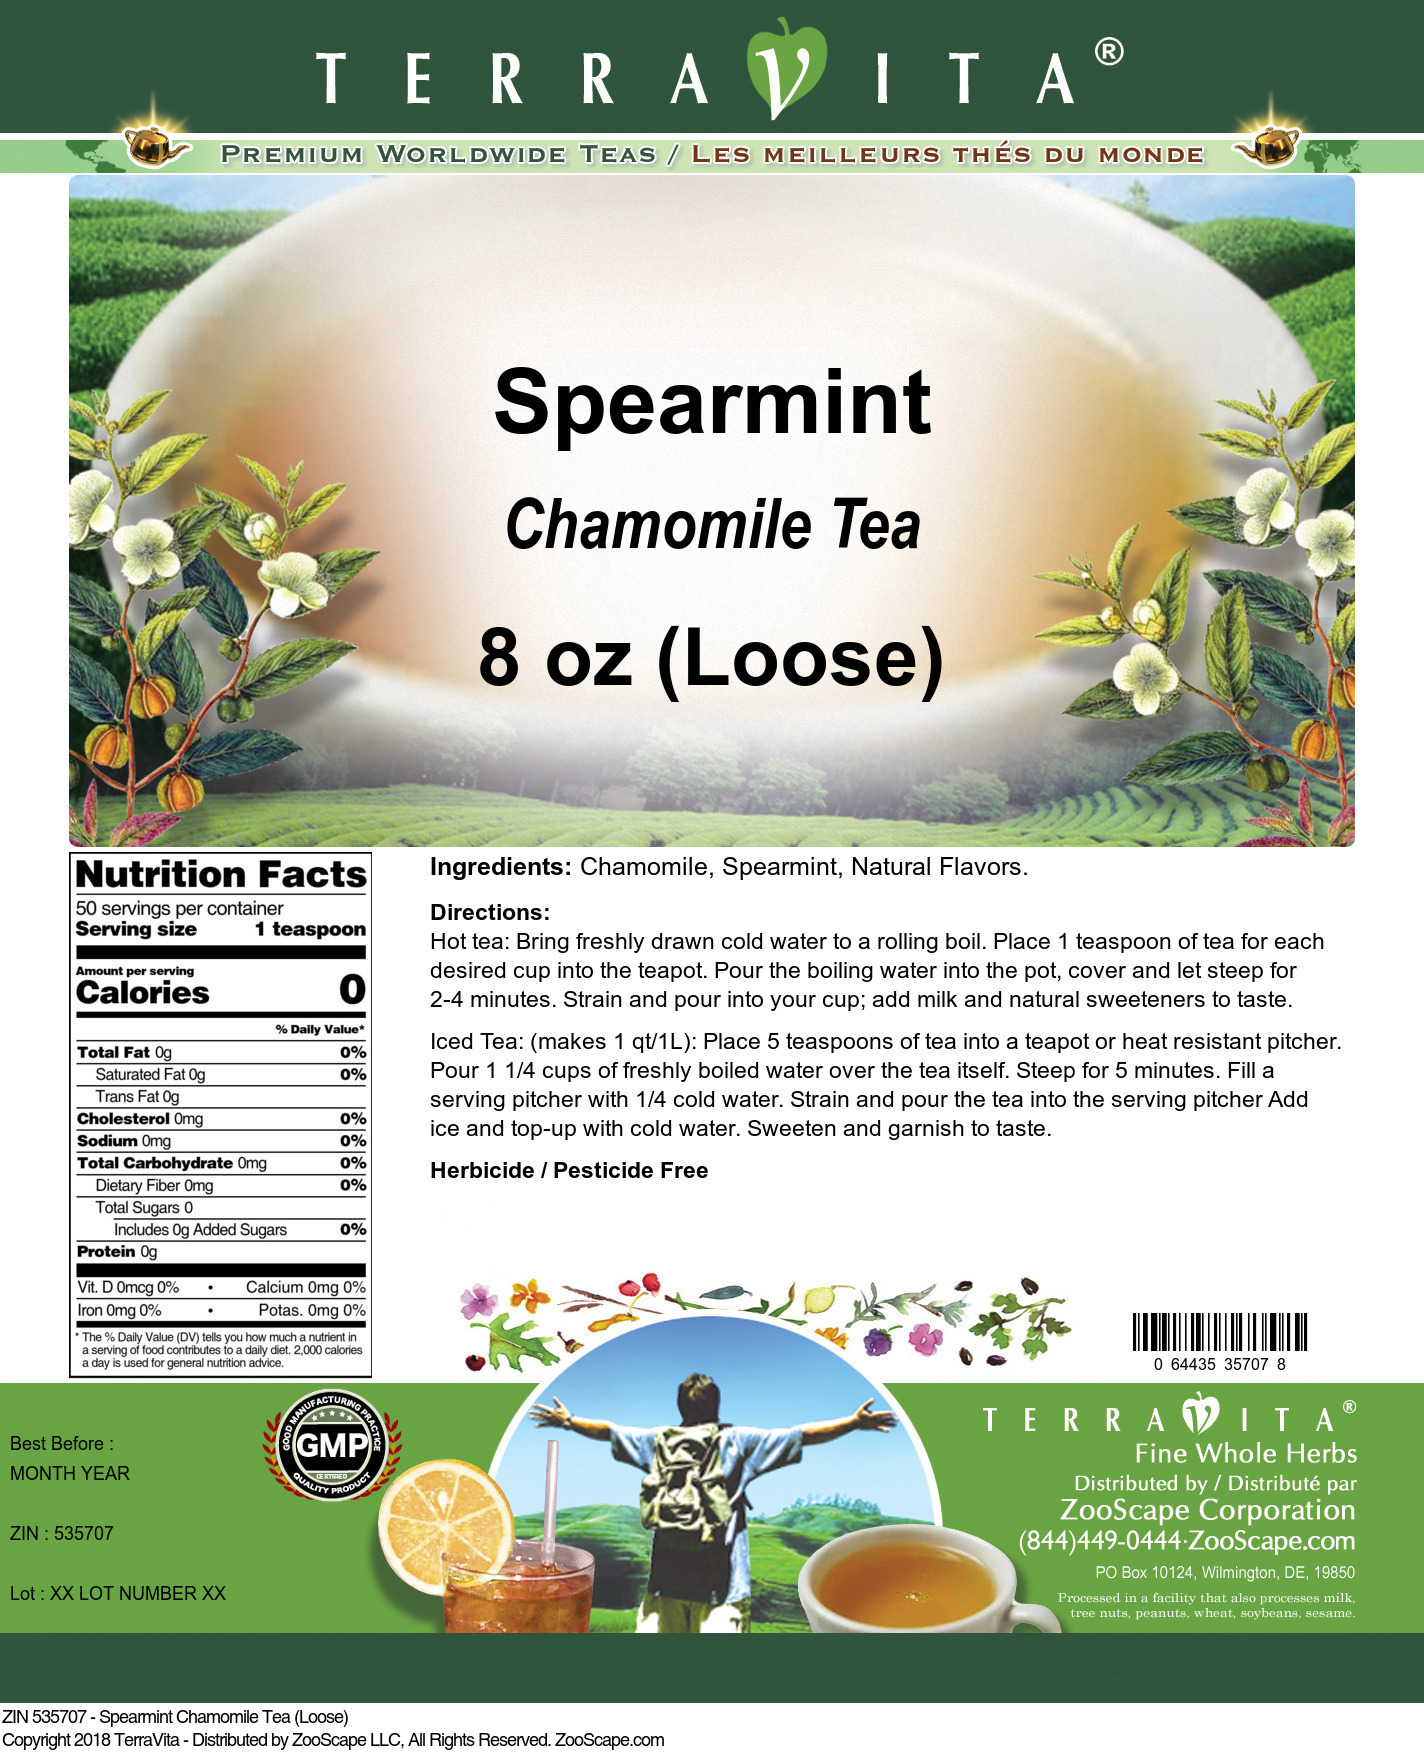 Spearmint Chamomile Tea (Loose) - Label